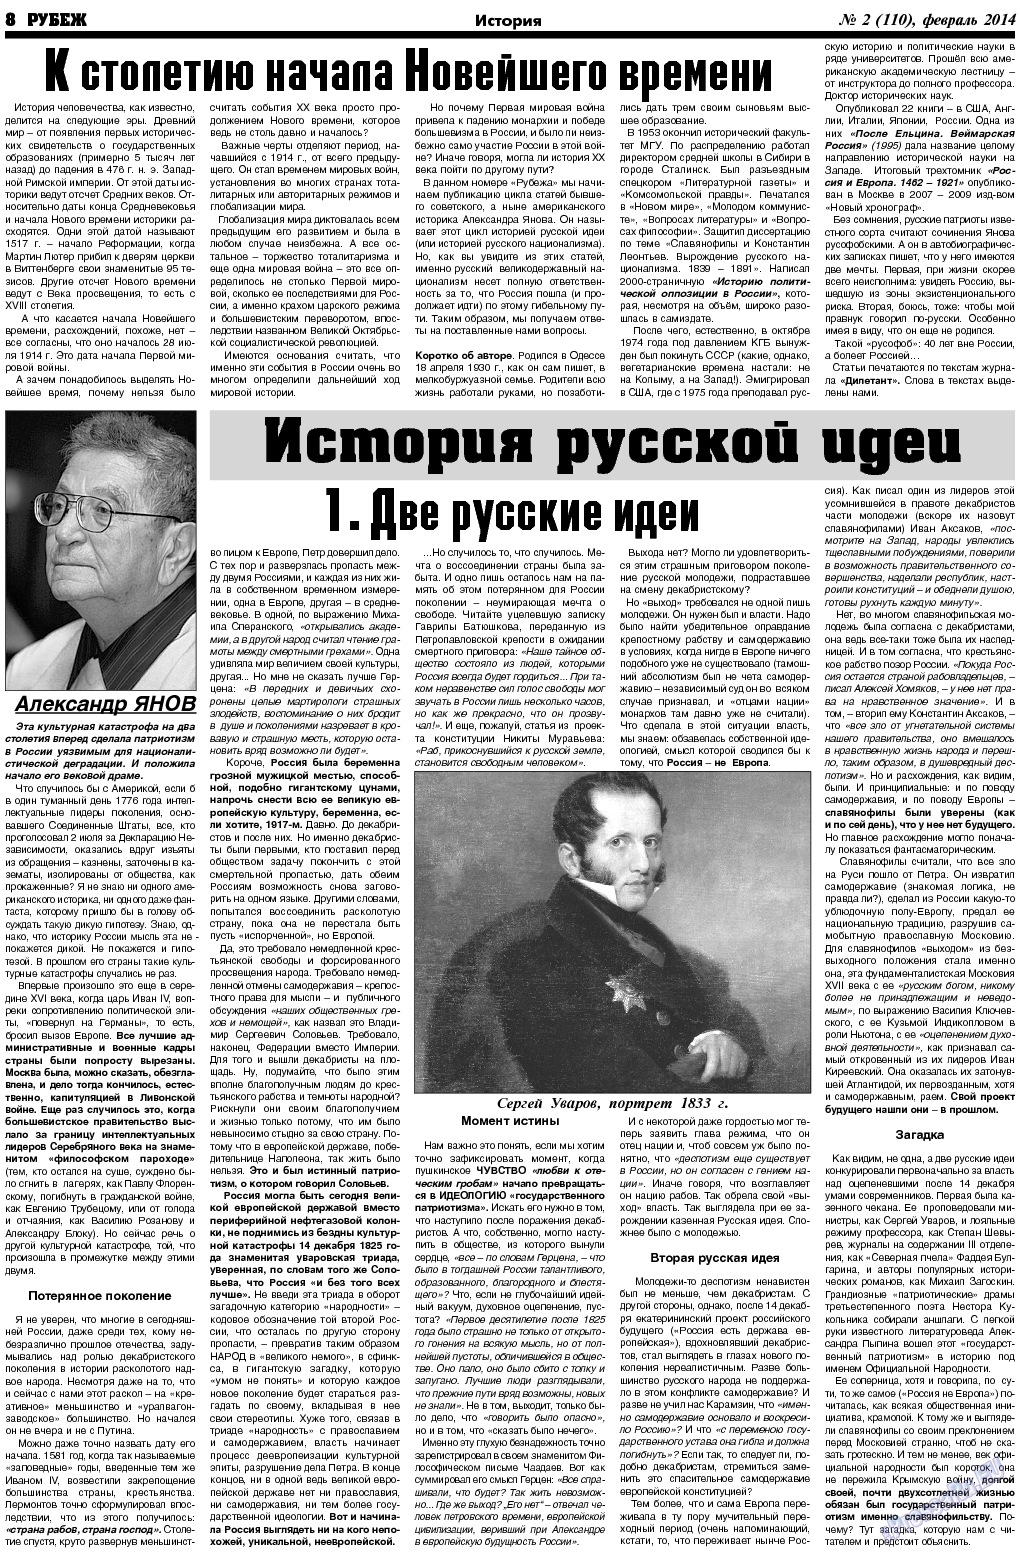 Рубеж, газета. 2014 №2 стр.8